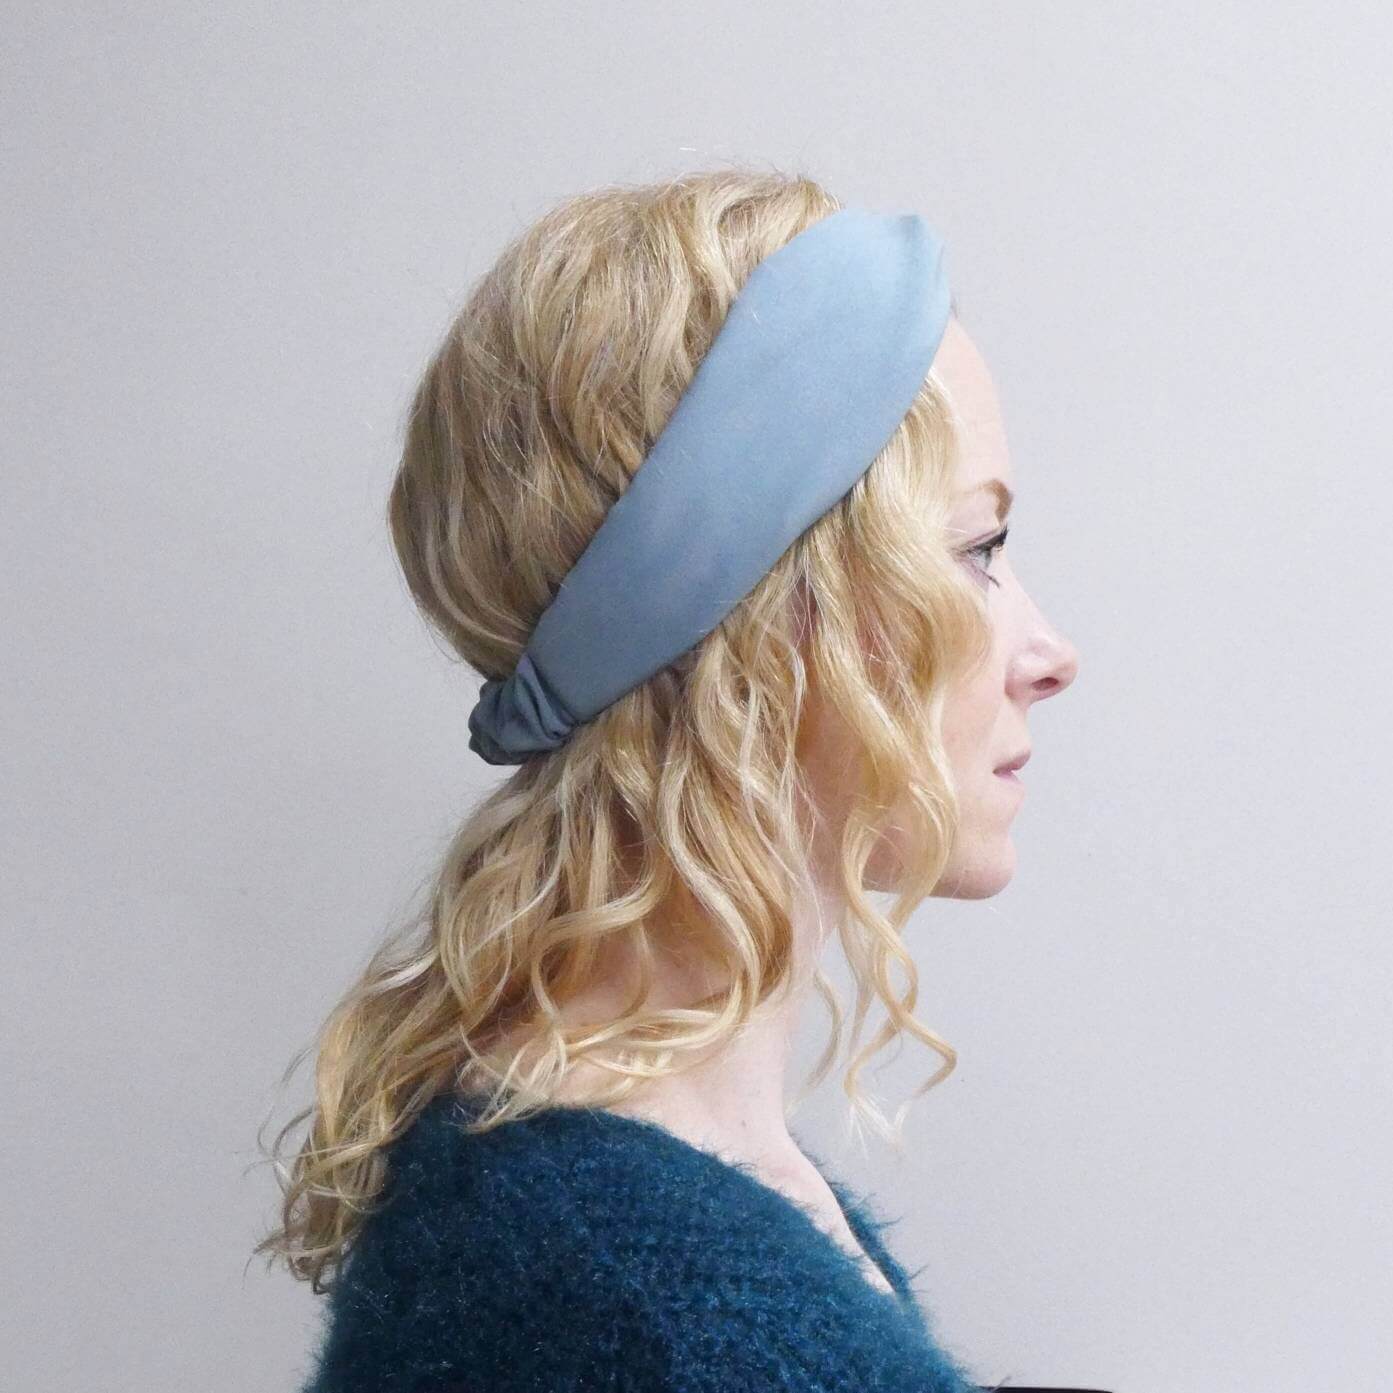 Model wears a soft, pale blue, viscose, elasticated turban twist headband.